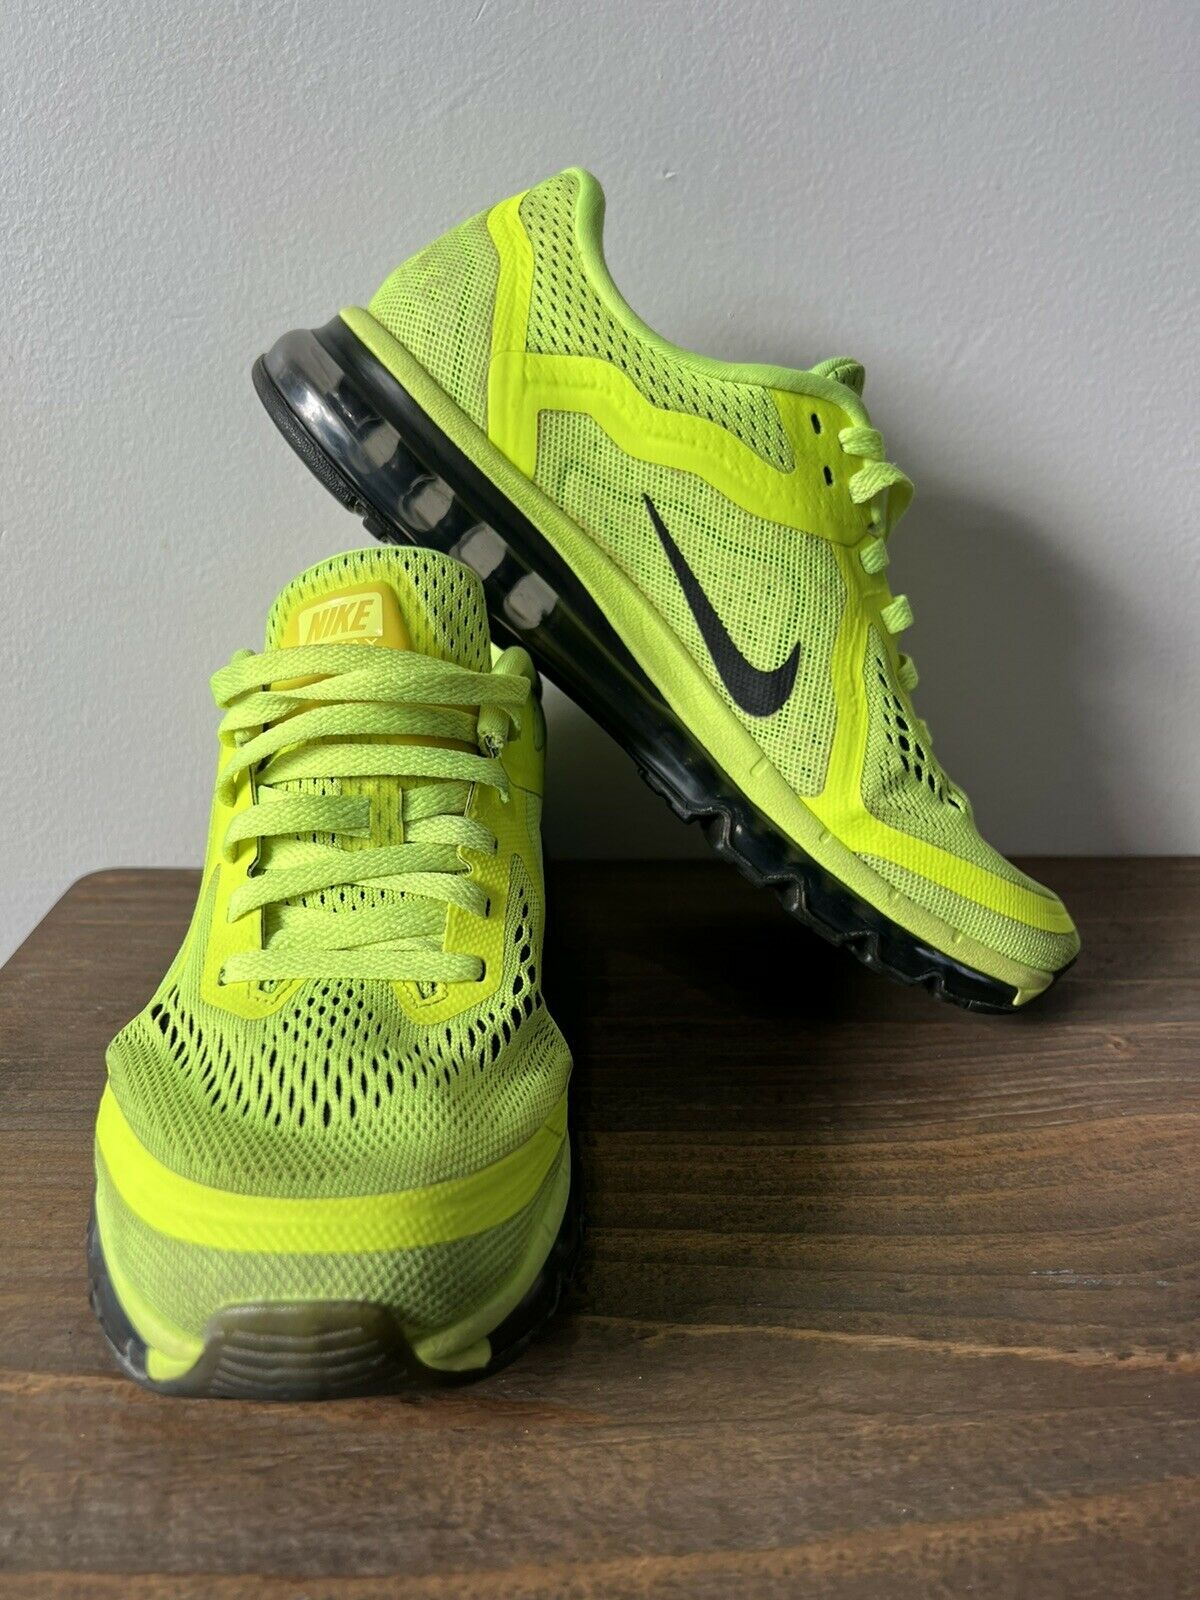 Nike Air Max 2013 Running Walking Shoes Black Volt Size 10 621077-700